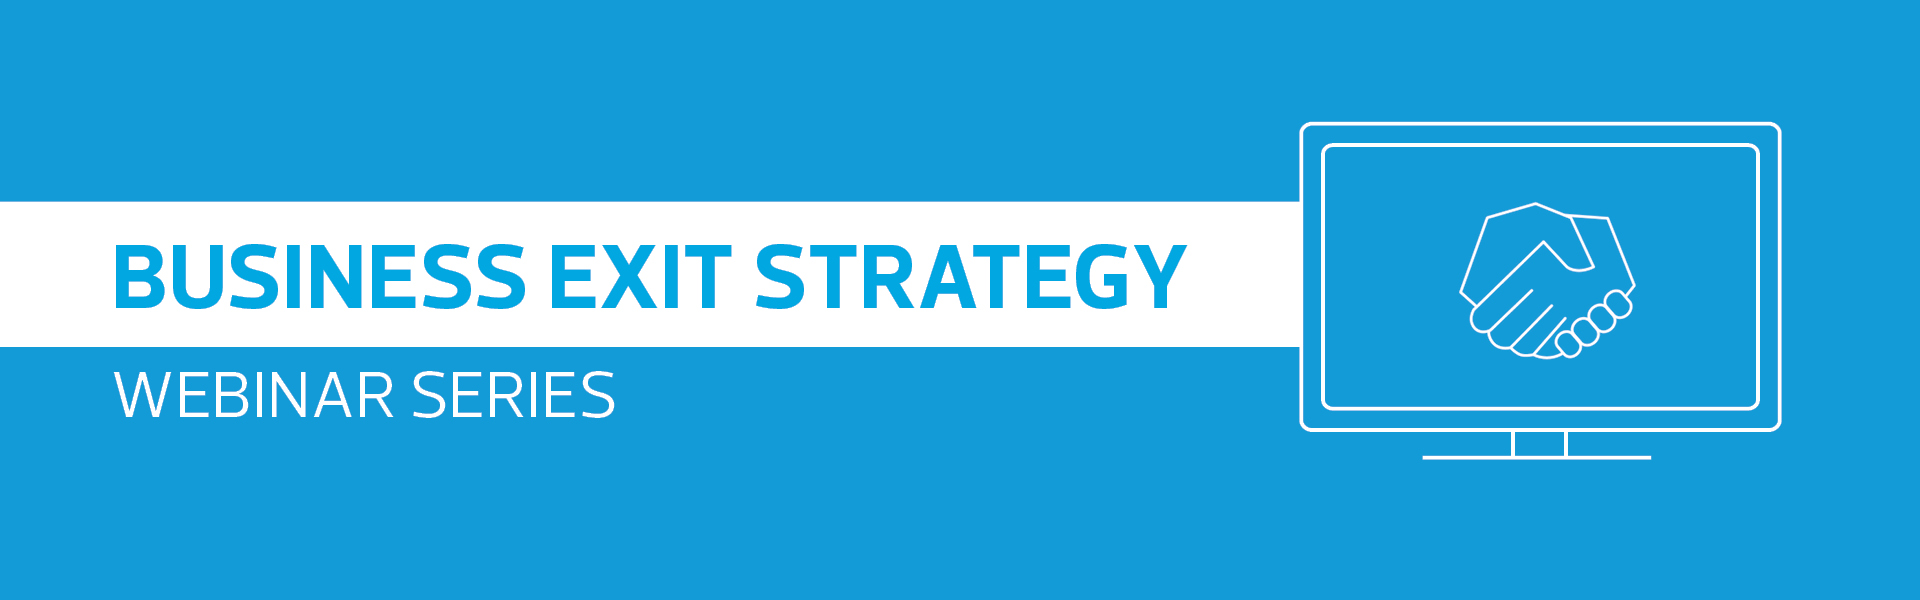 Business Exit Strategy Webinar Series | RSM Australia